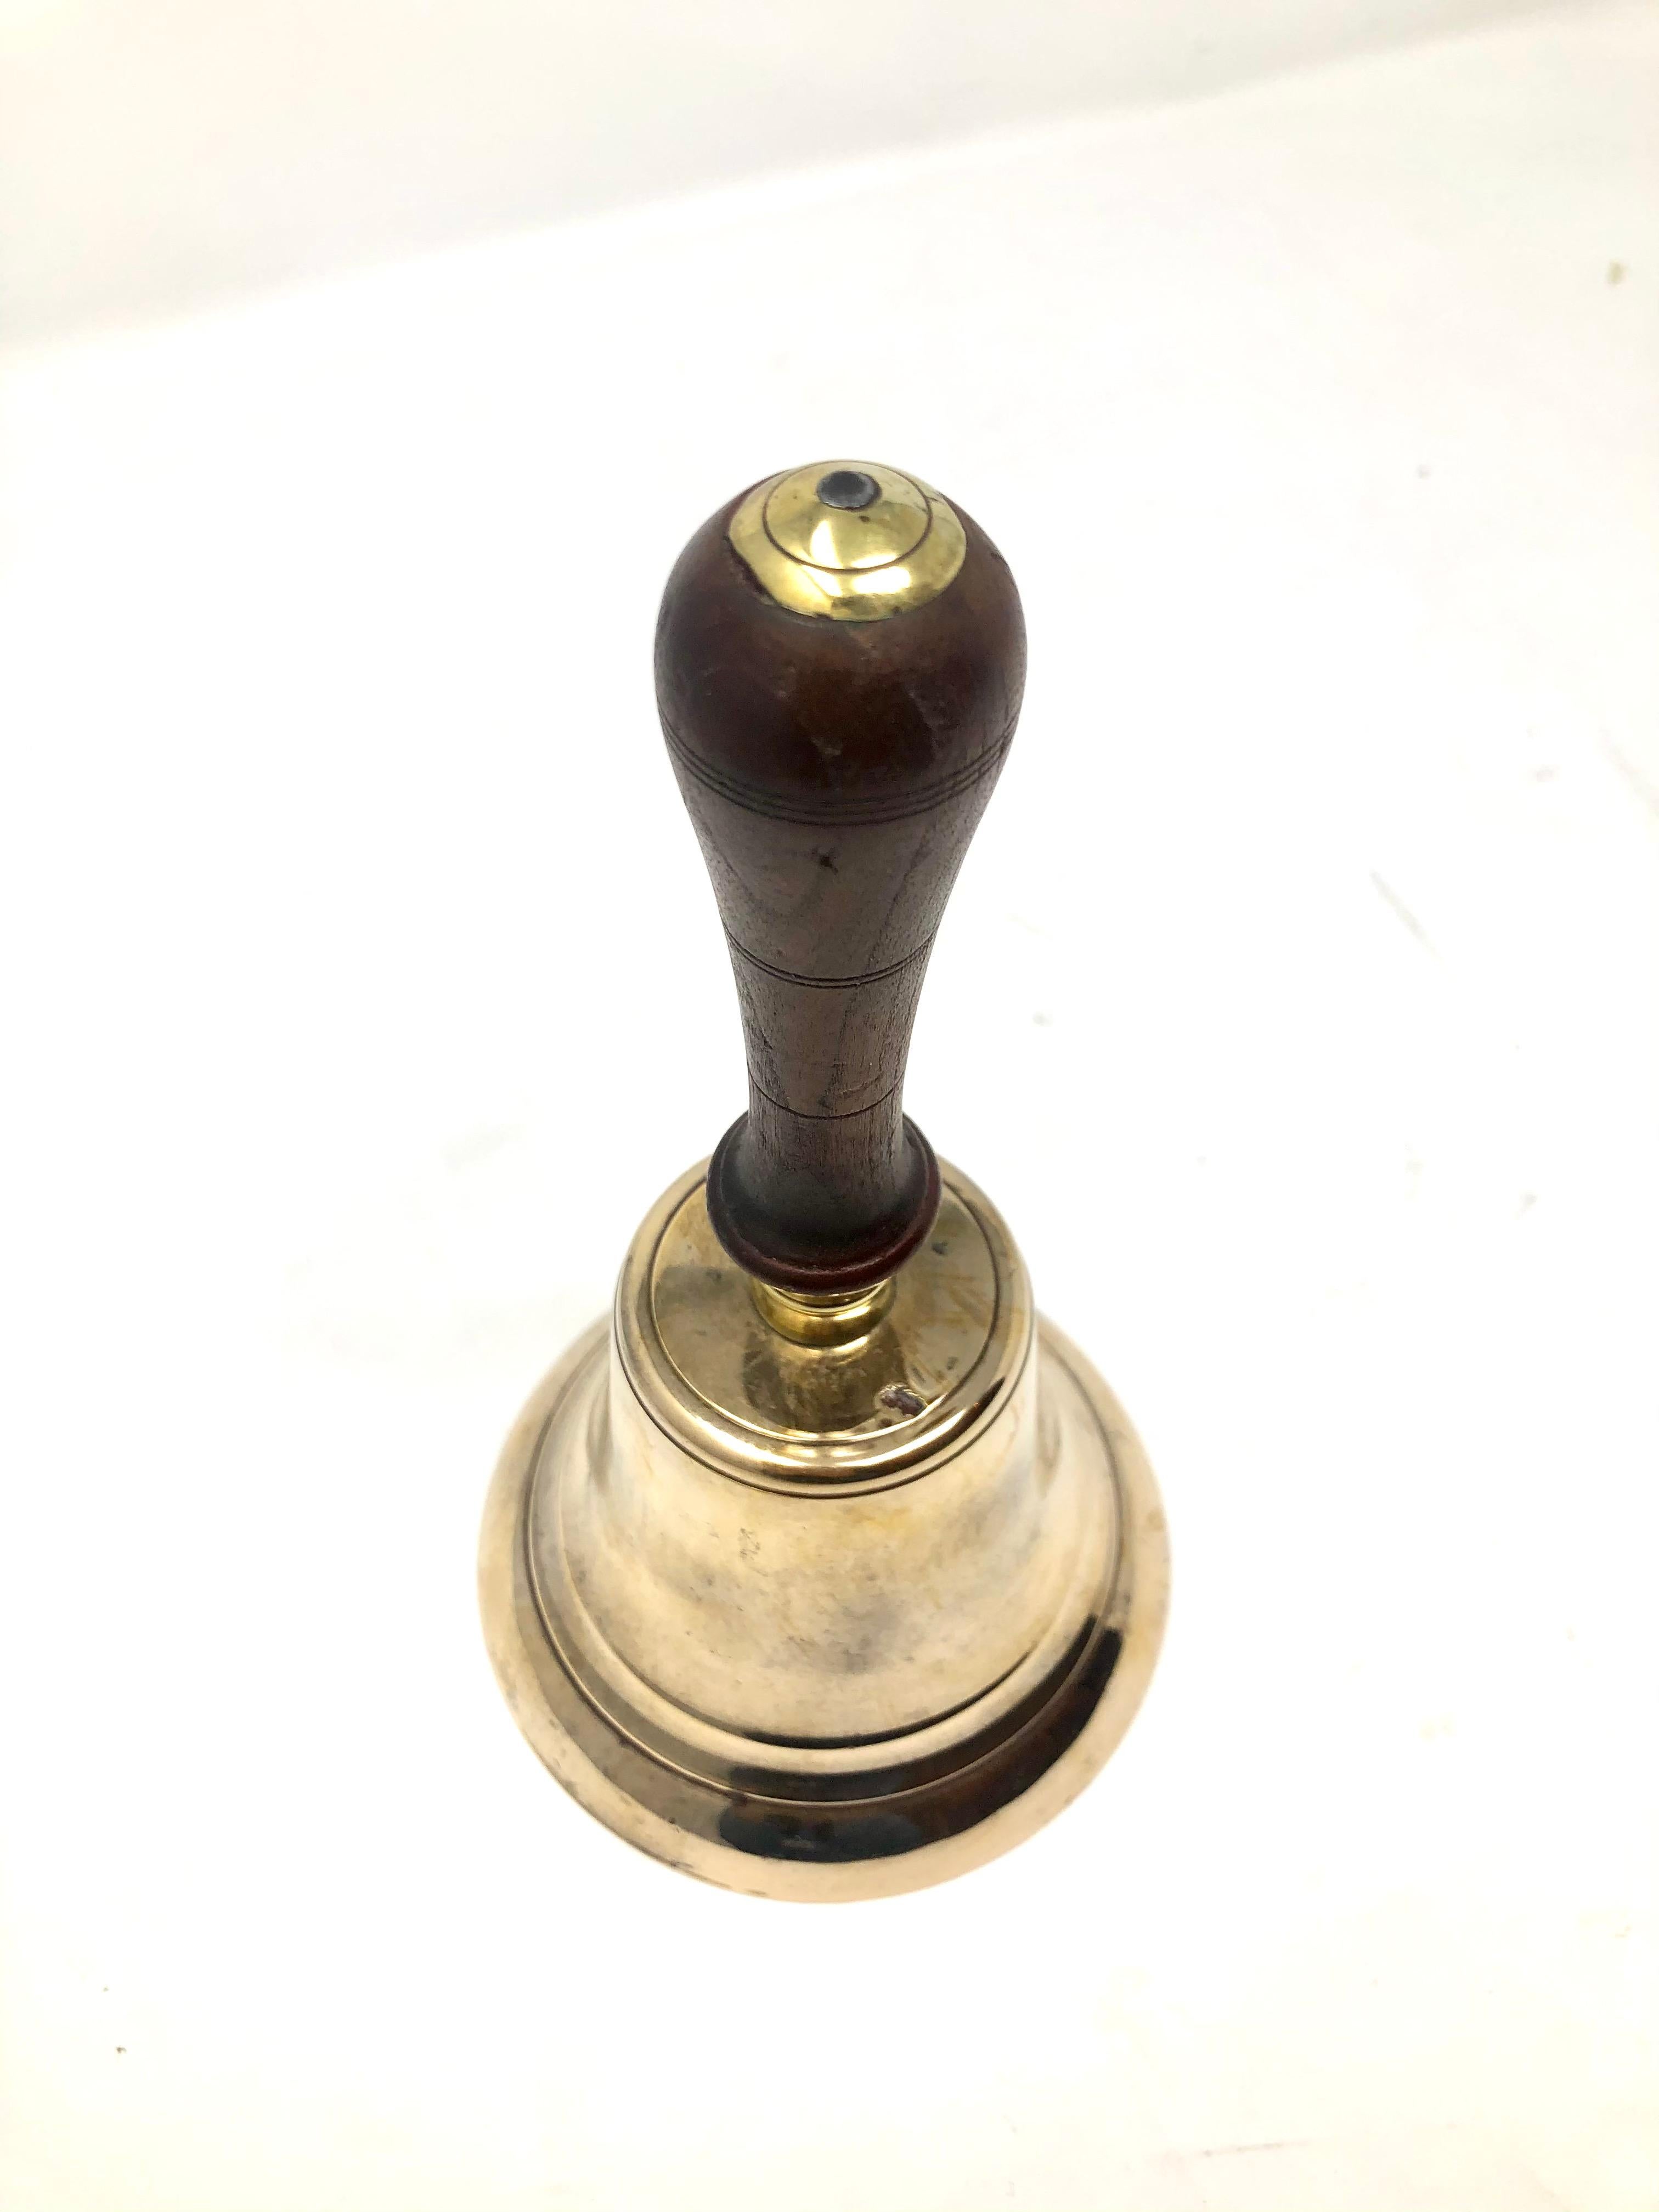 Antique English brass hand bell mahogany handle, Circa 1900.